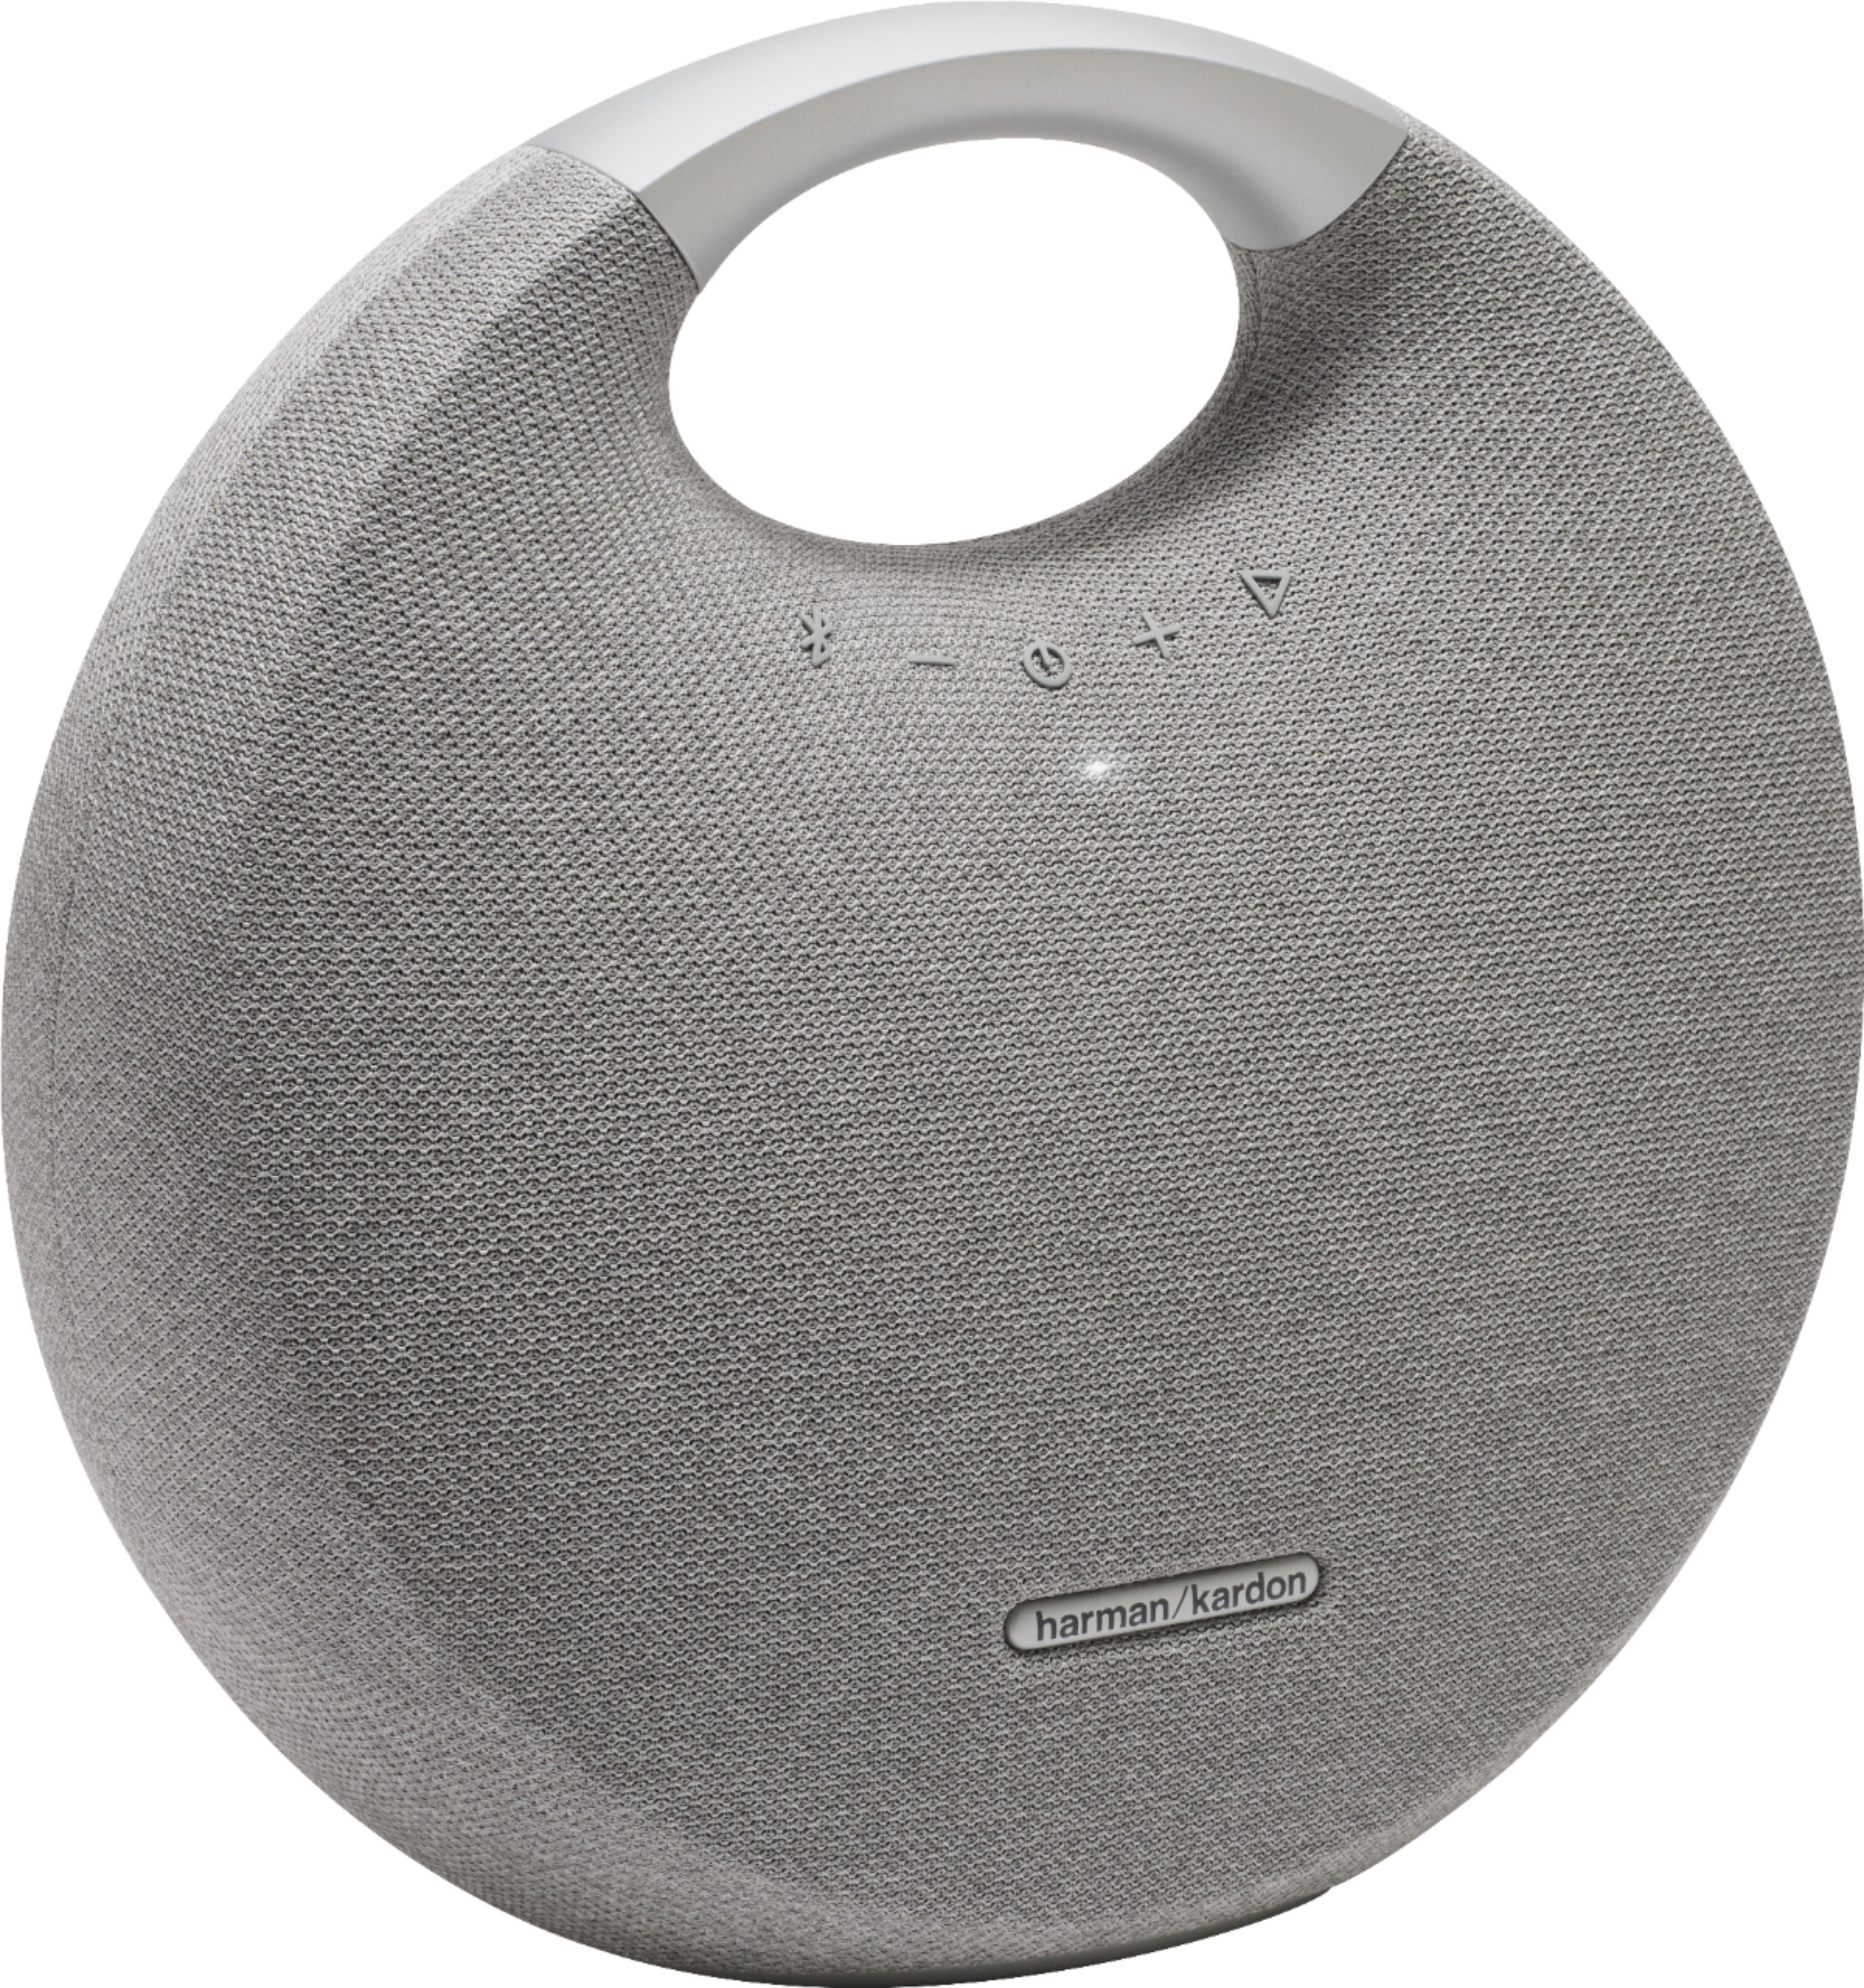 Harman Kardon Onyx Studio Portable Wireless Bluetooth Speaker - Black for  sale online